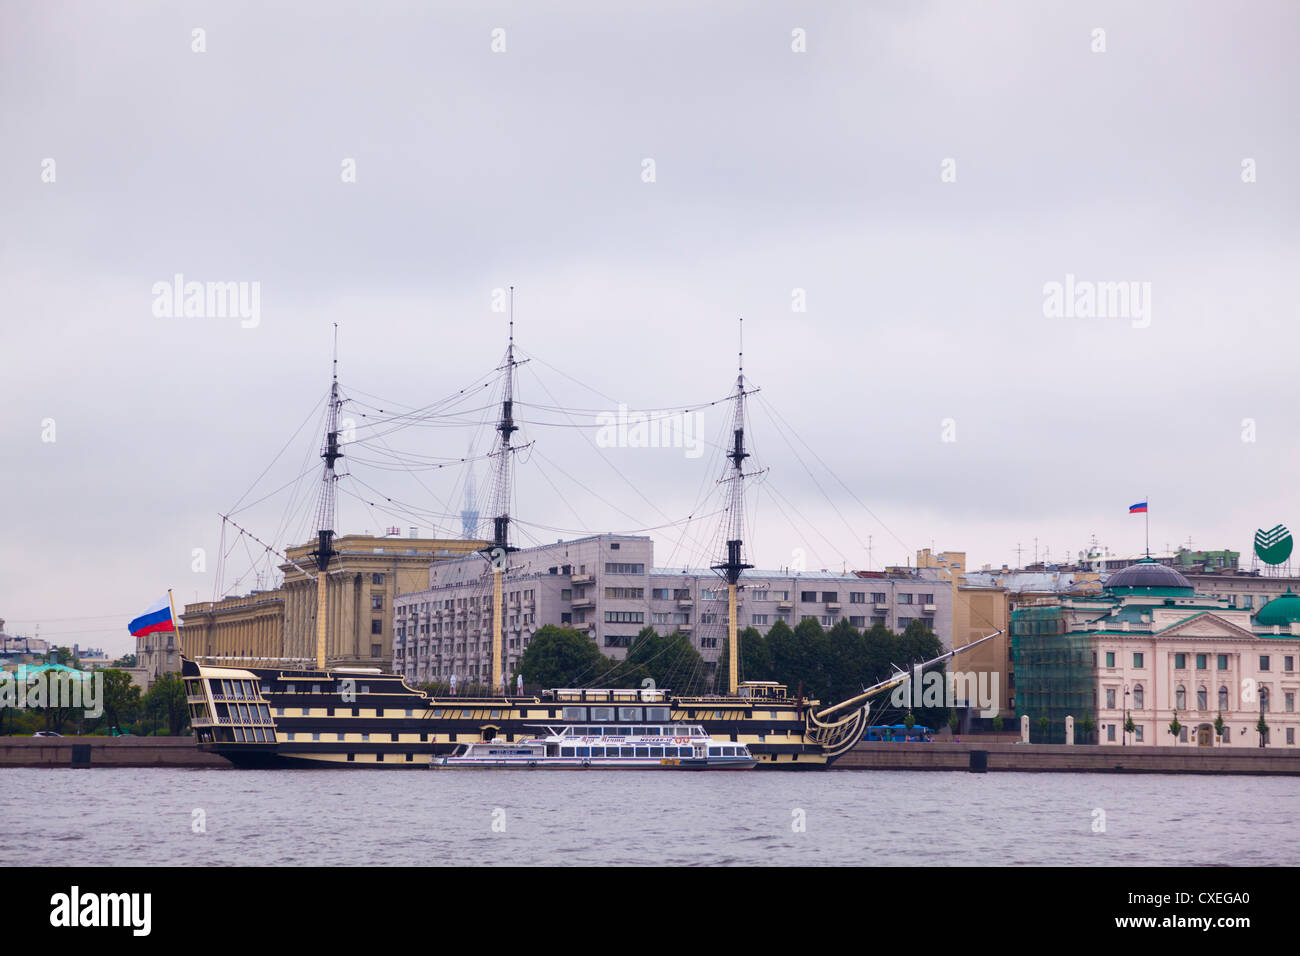 St Petersburg Russia. Tall ship on the Neva river Stock Photo